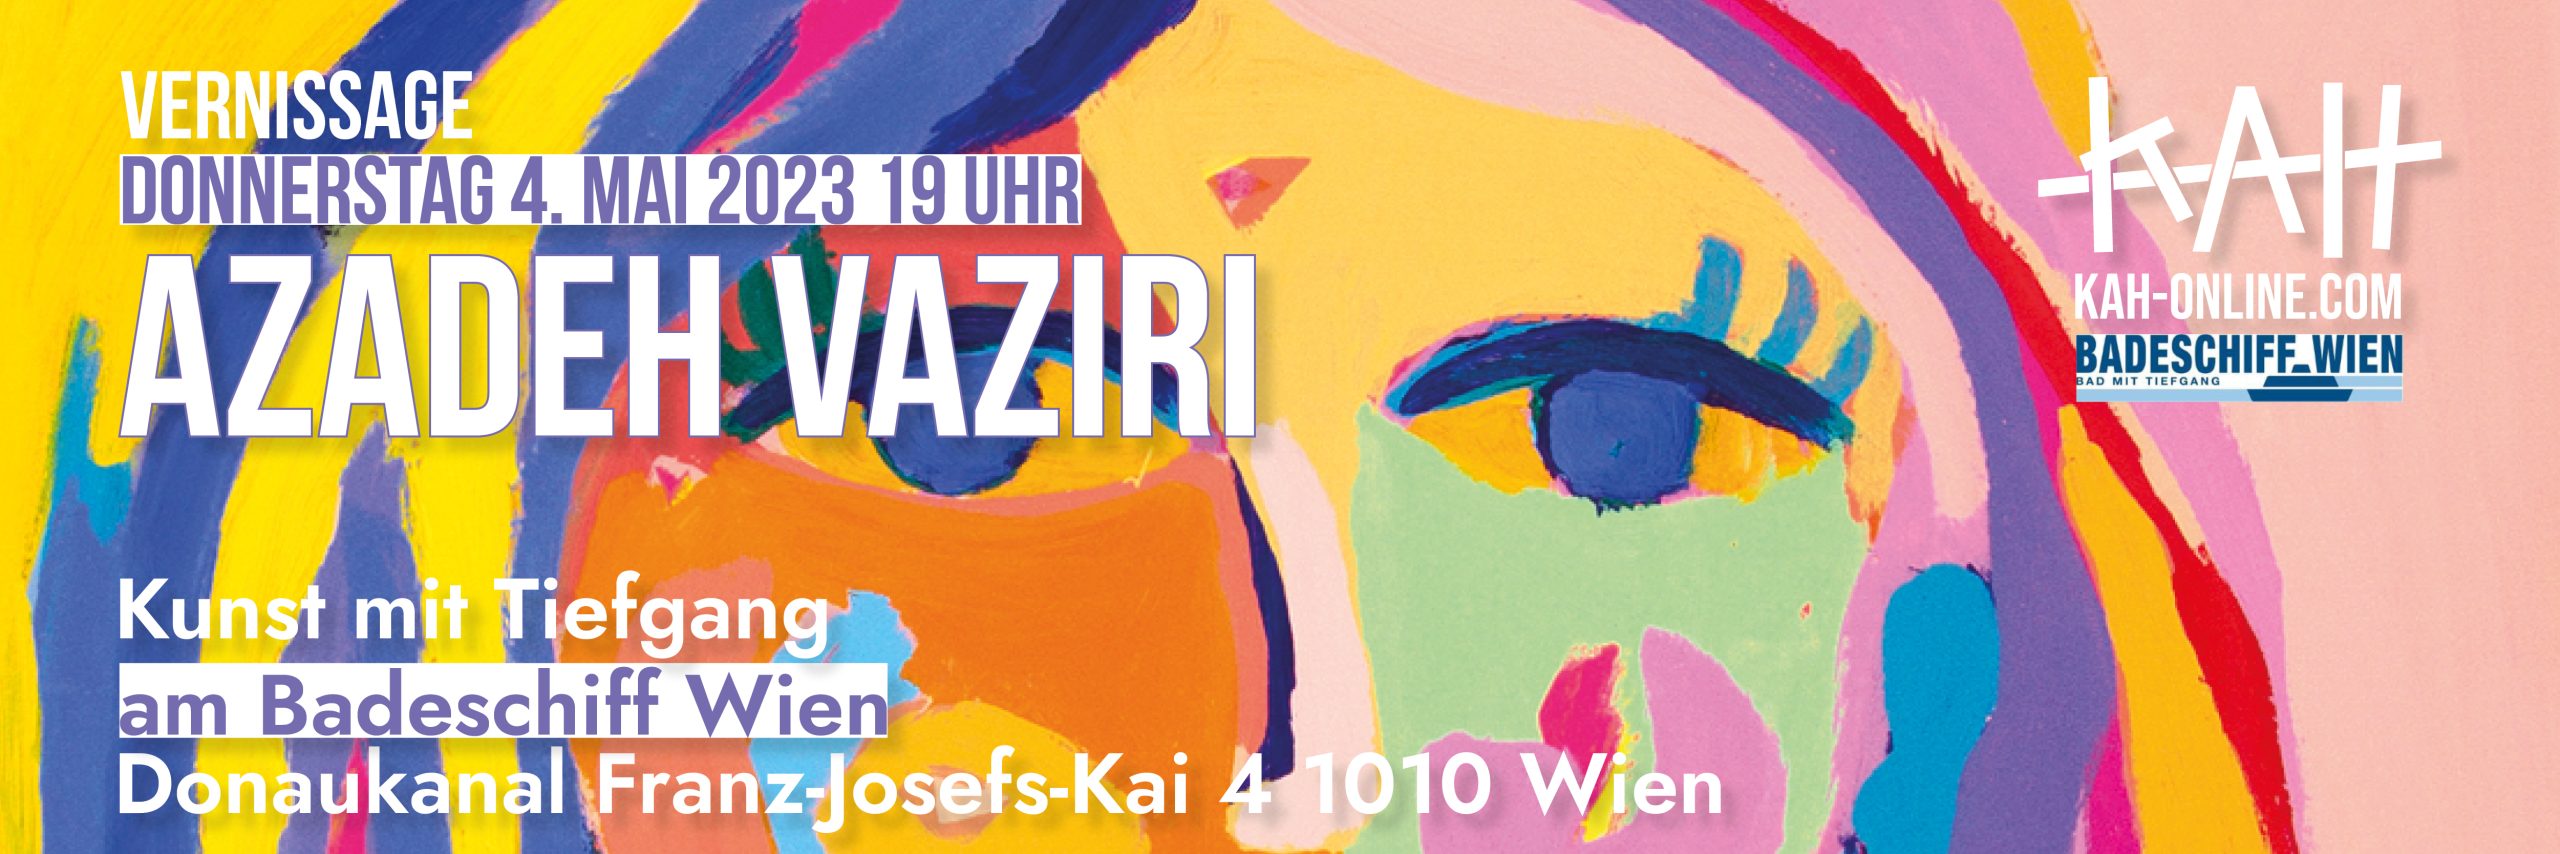 Vernissage - Azadeh Vaziri // pres. by Kunst ab Hinterhof am 4. May 2023 @ Badeschiff Wien.